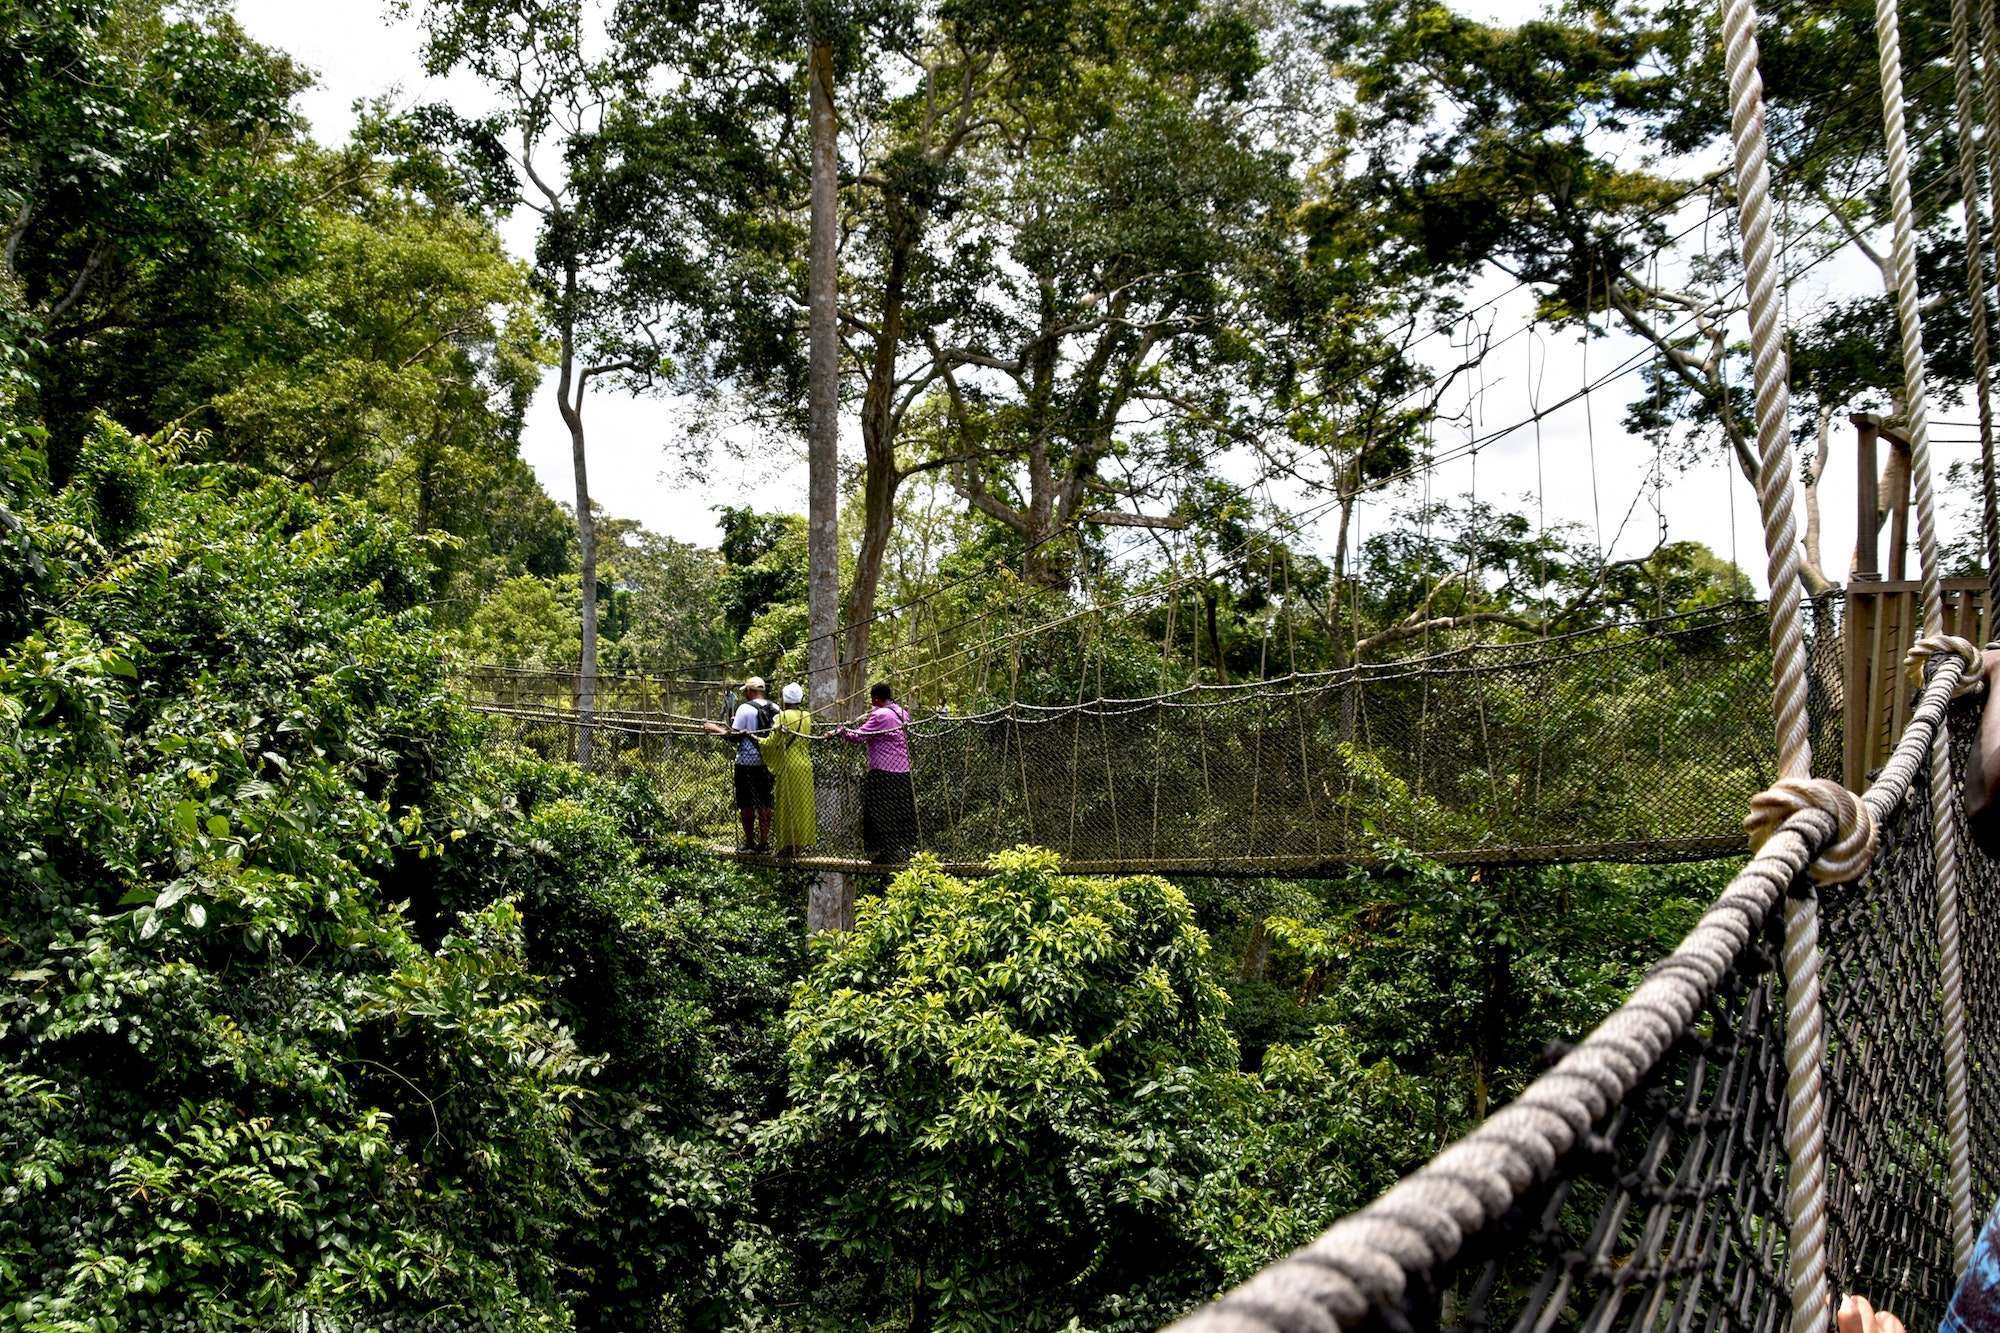 Kakum national park in Ghana, treetop walk on rope bridges